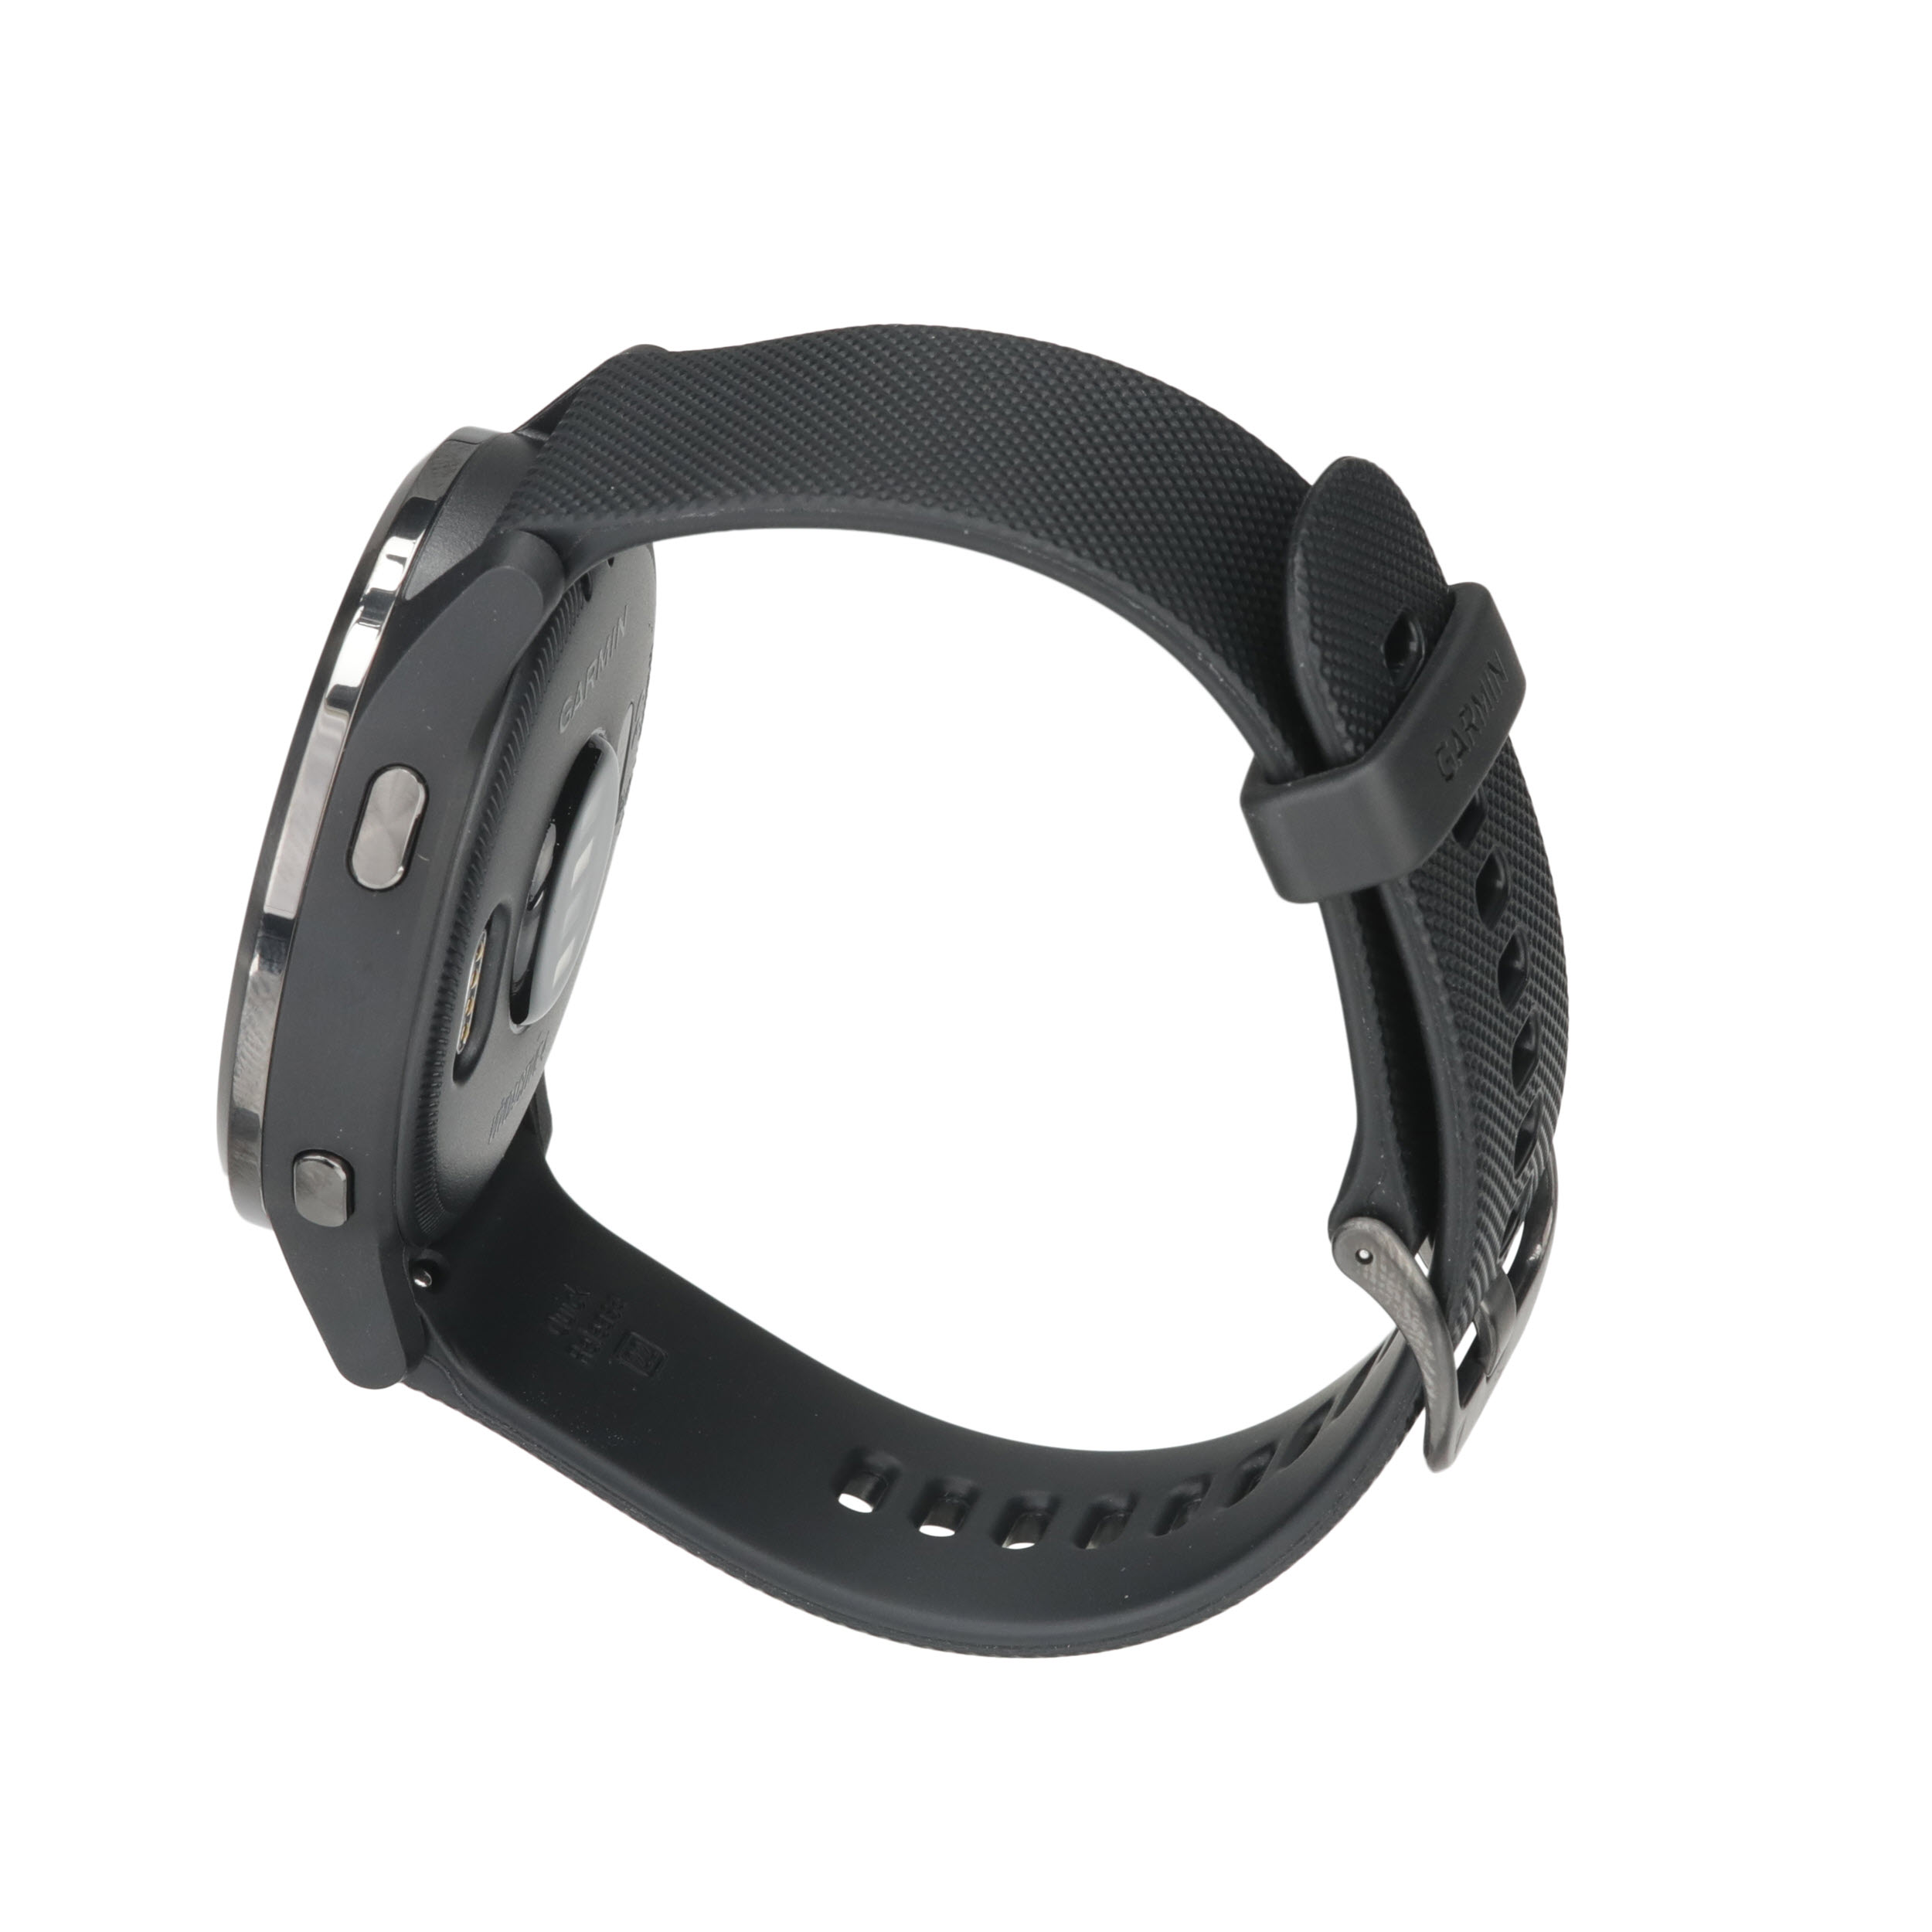 Garmin 010-02174-11 Vivoactive 4 Black With Slate Hardware GPS Fitness  Watch for sale online